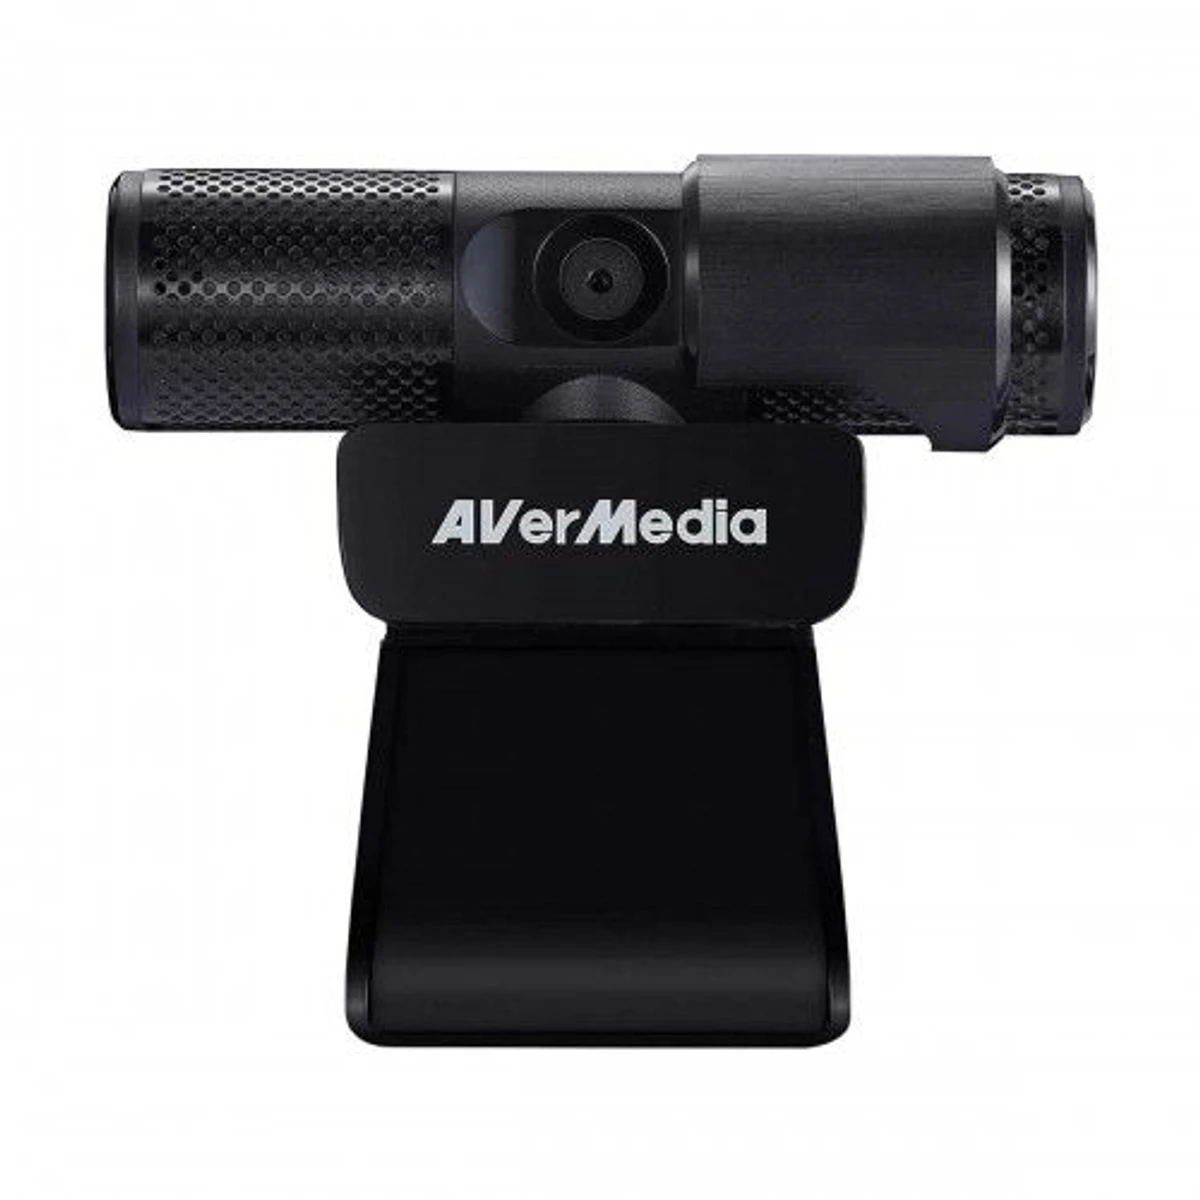 AVerMedia PW313 2MP Fixed Focus USB Webcam